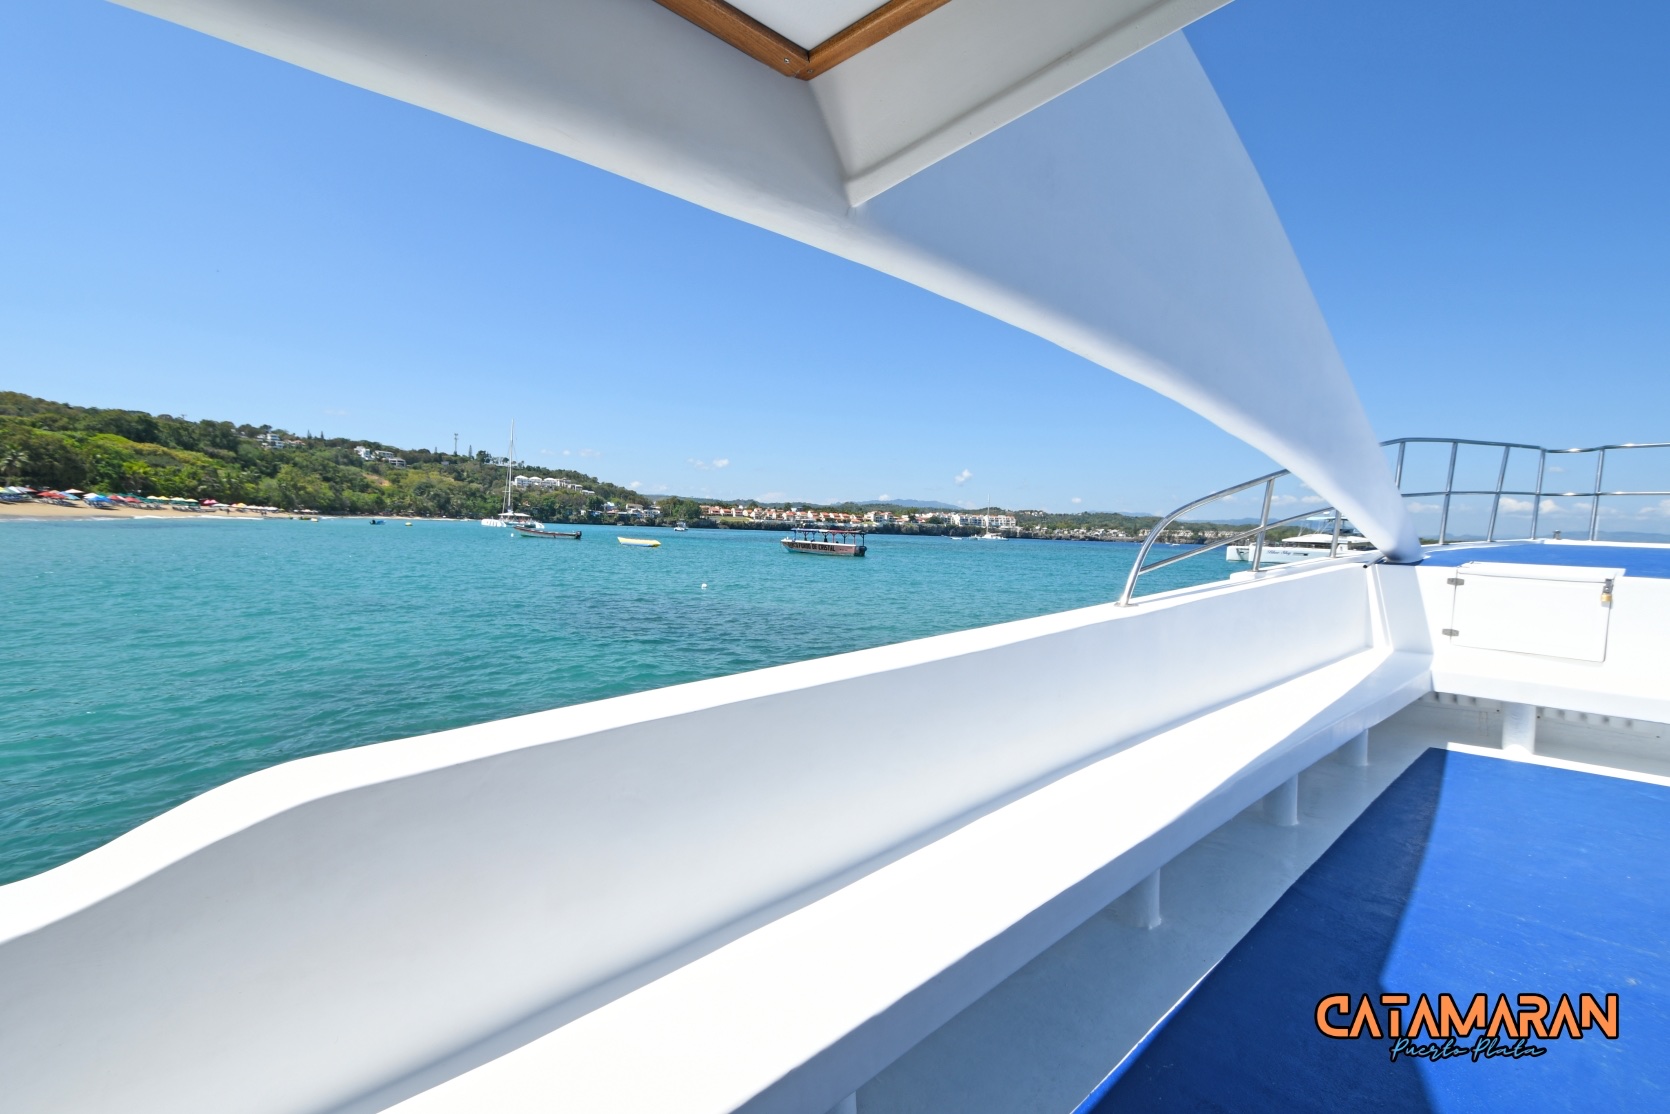 Gorgeous views from the catamaran